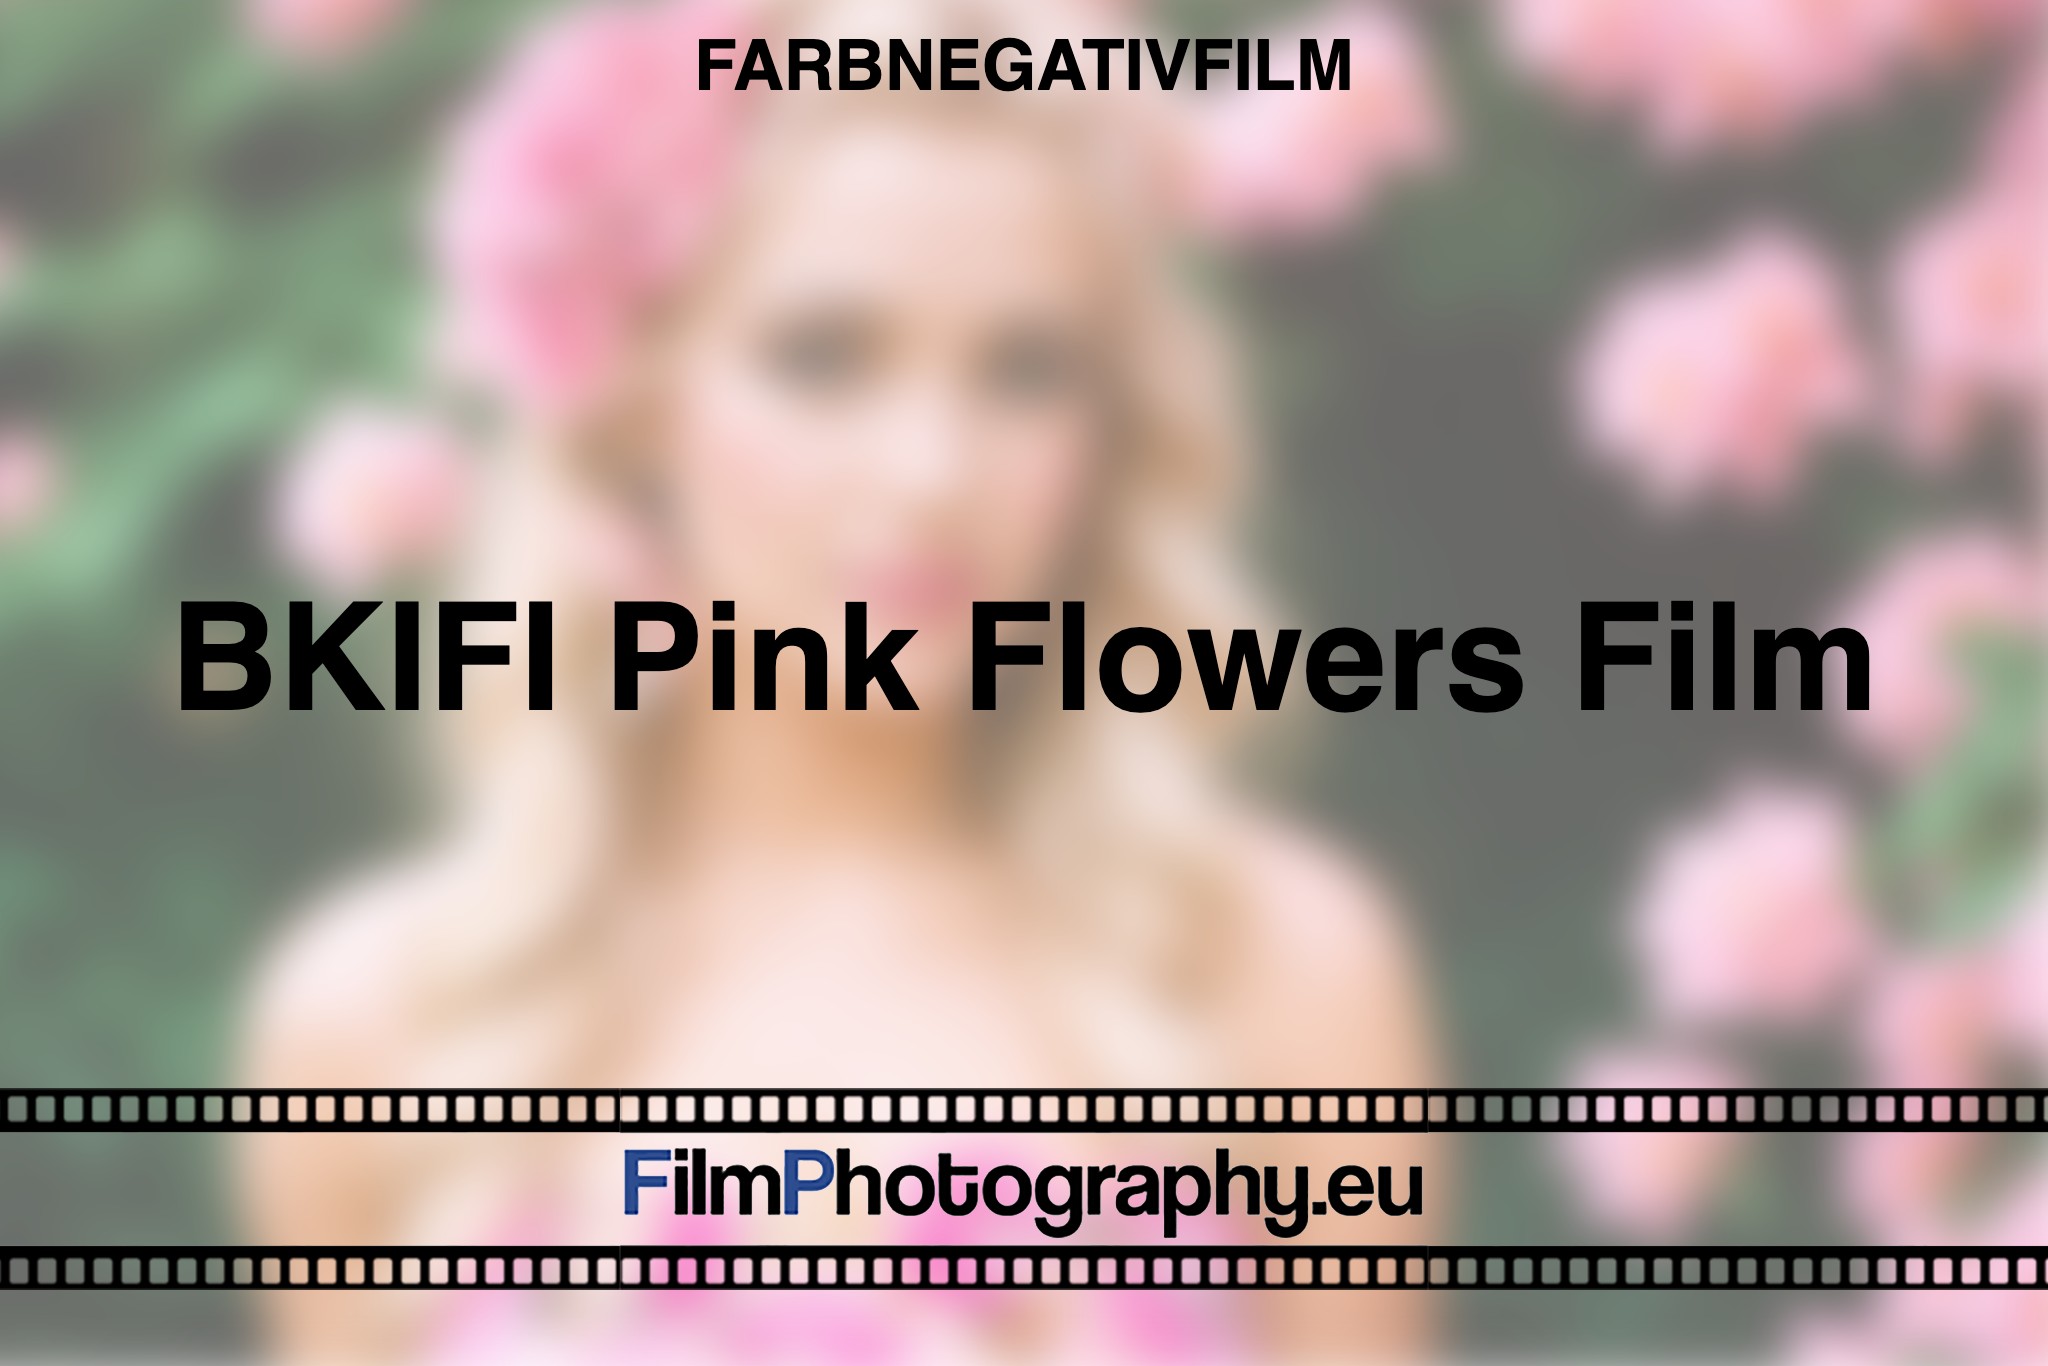 BKIFI-Pink-Flowers-Film-Farbnegativfilm-bnv